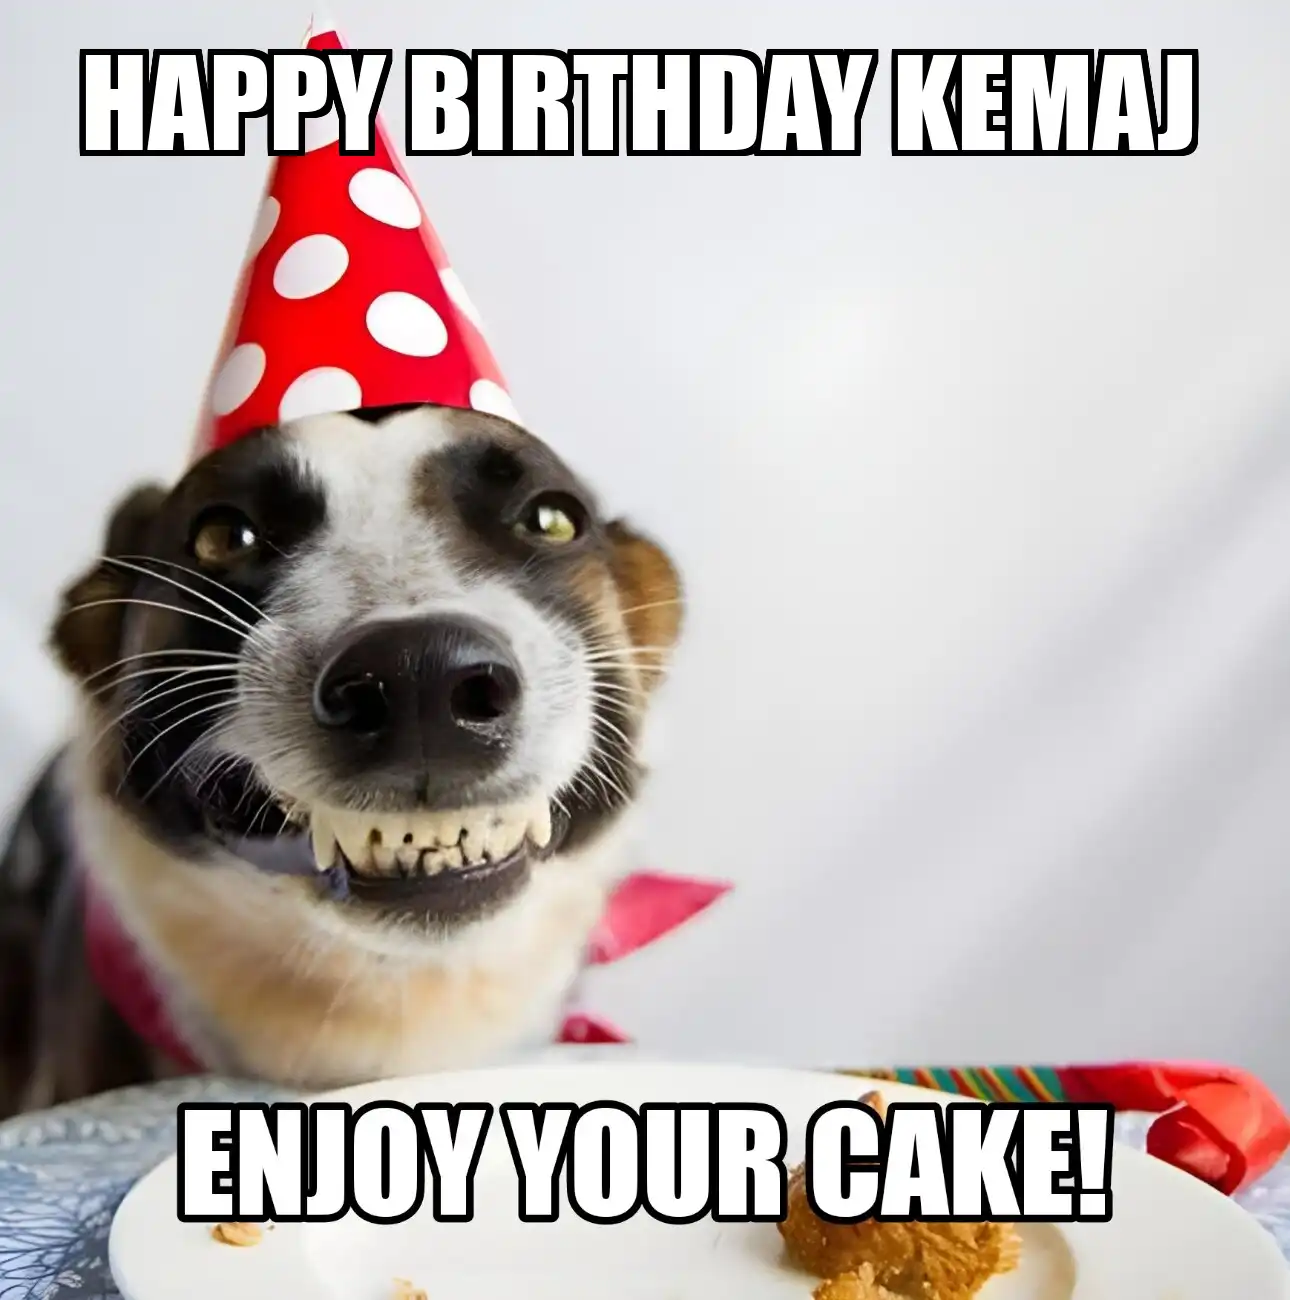 Happy Birthday Kemaj Enjoy Your Cake Dog Meme